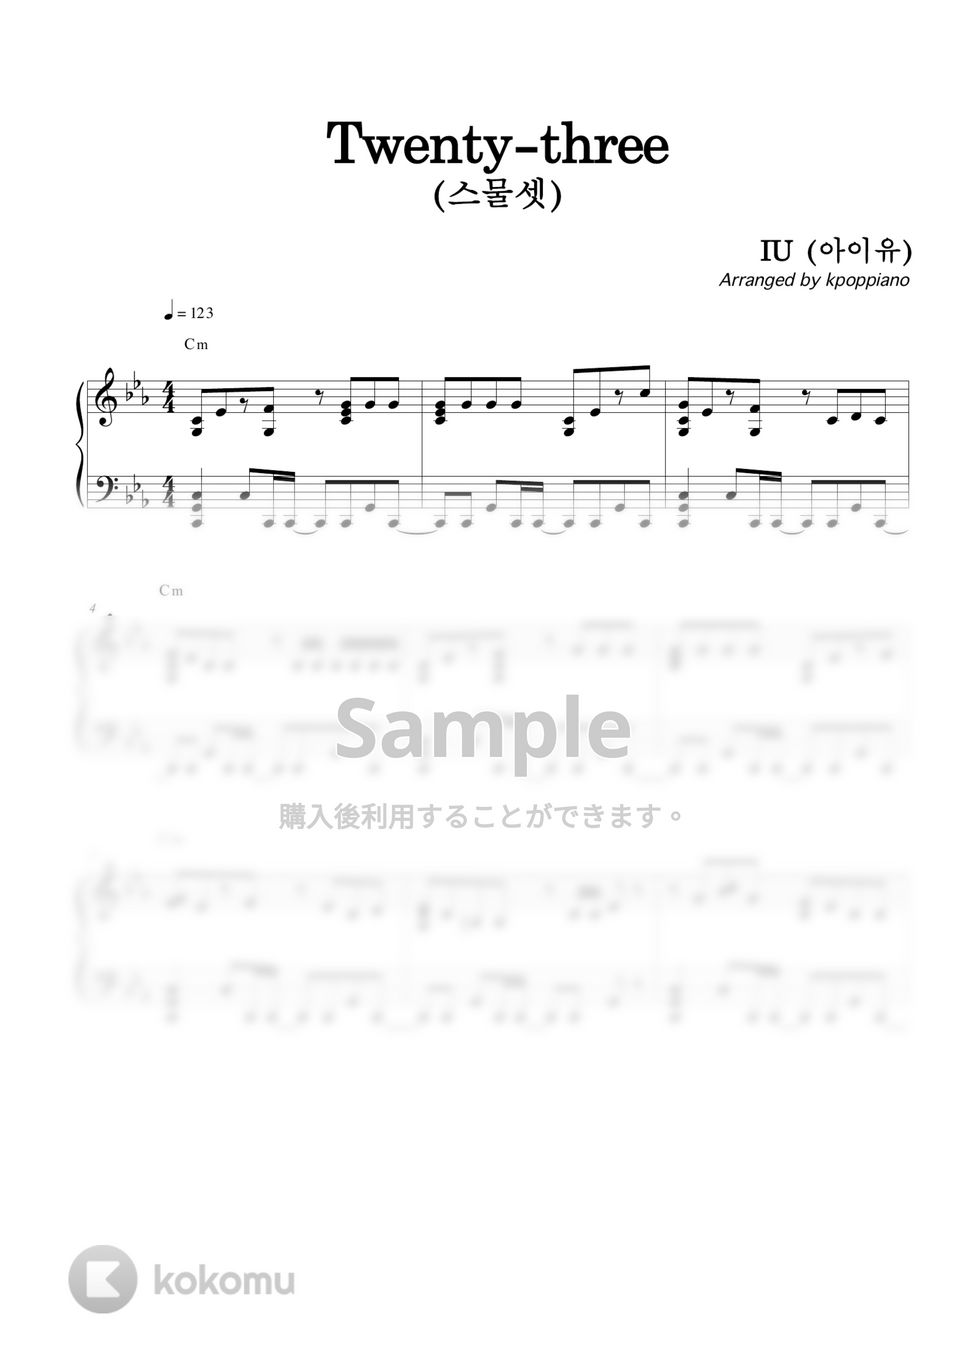 IU - ２３ (Twenty-three) by KPOP PIANO